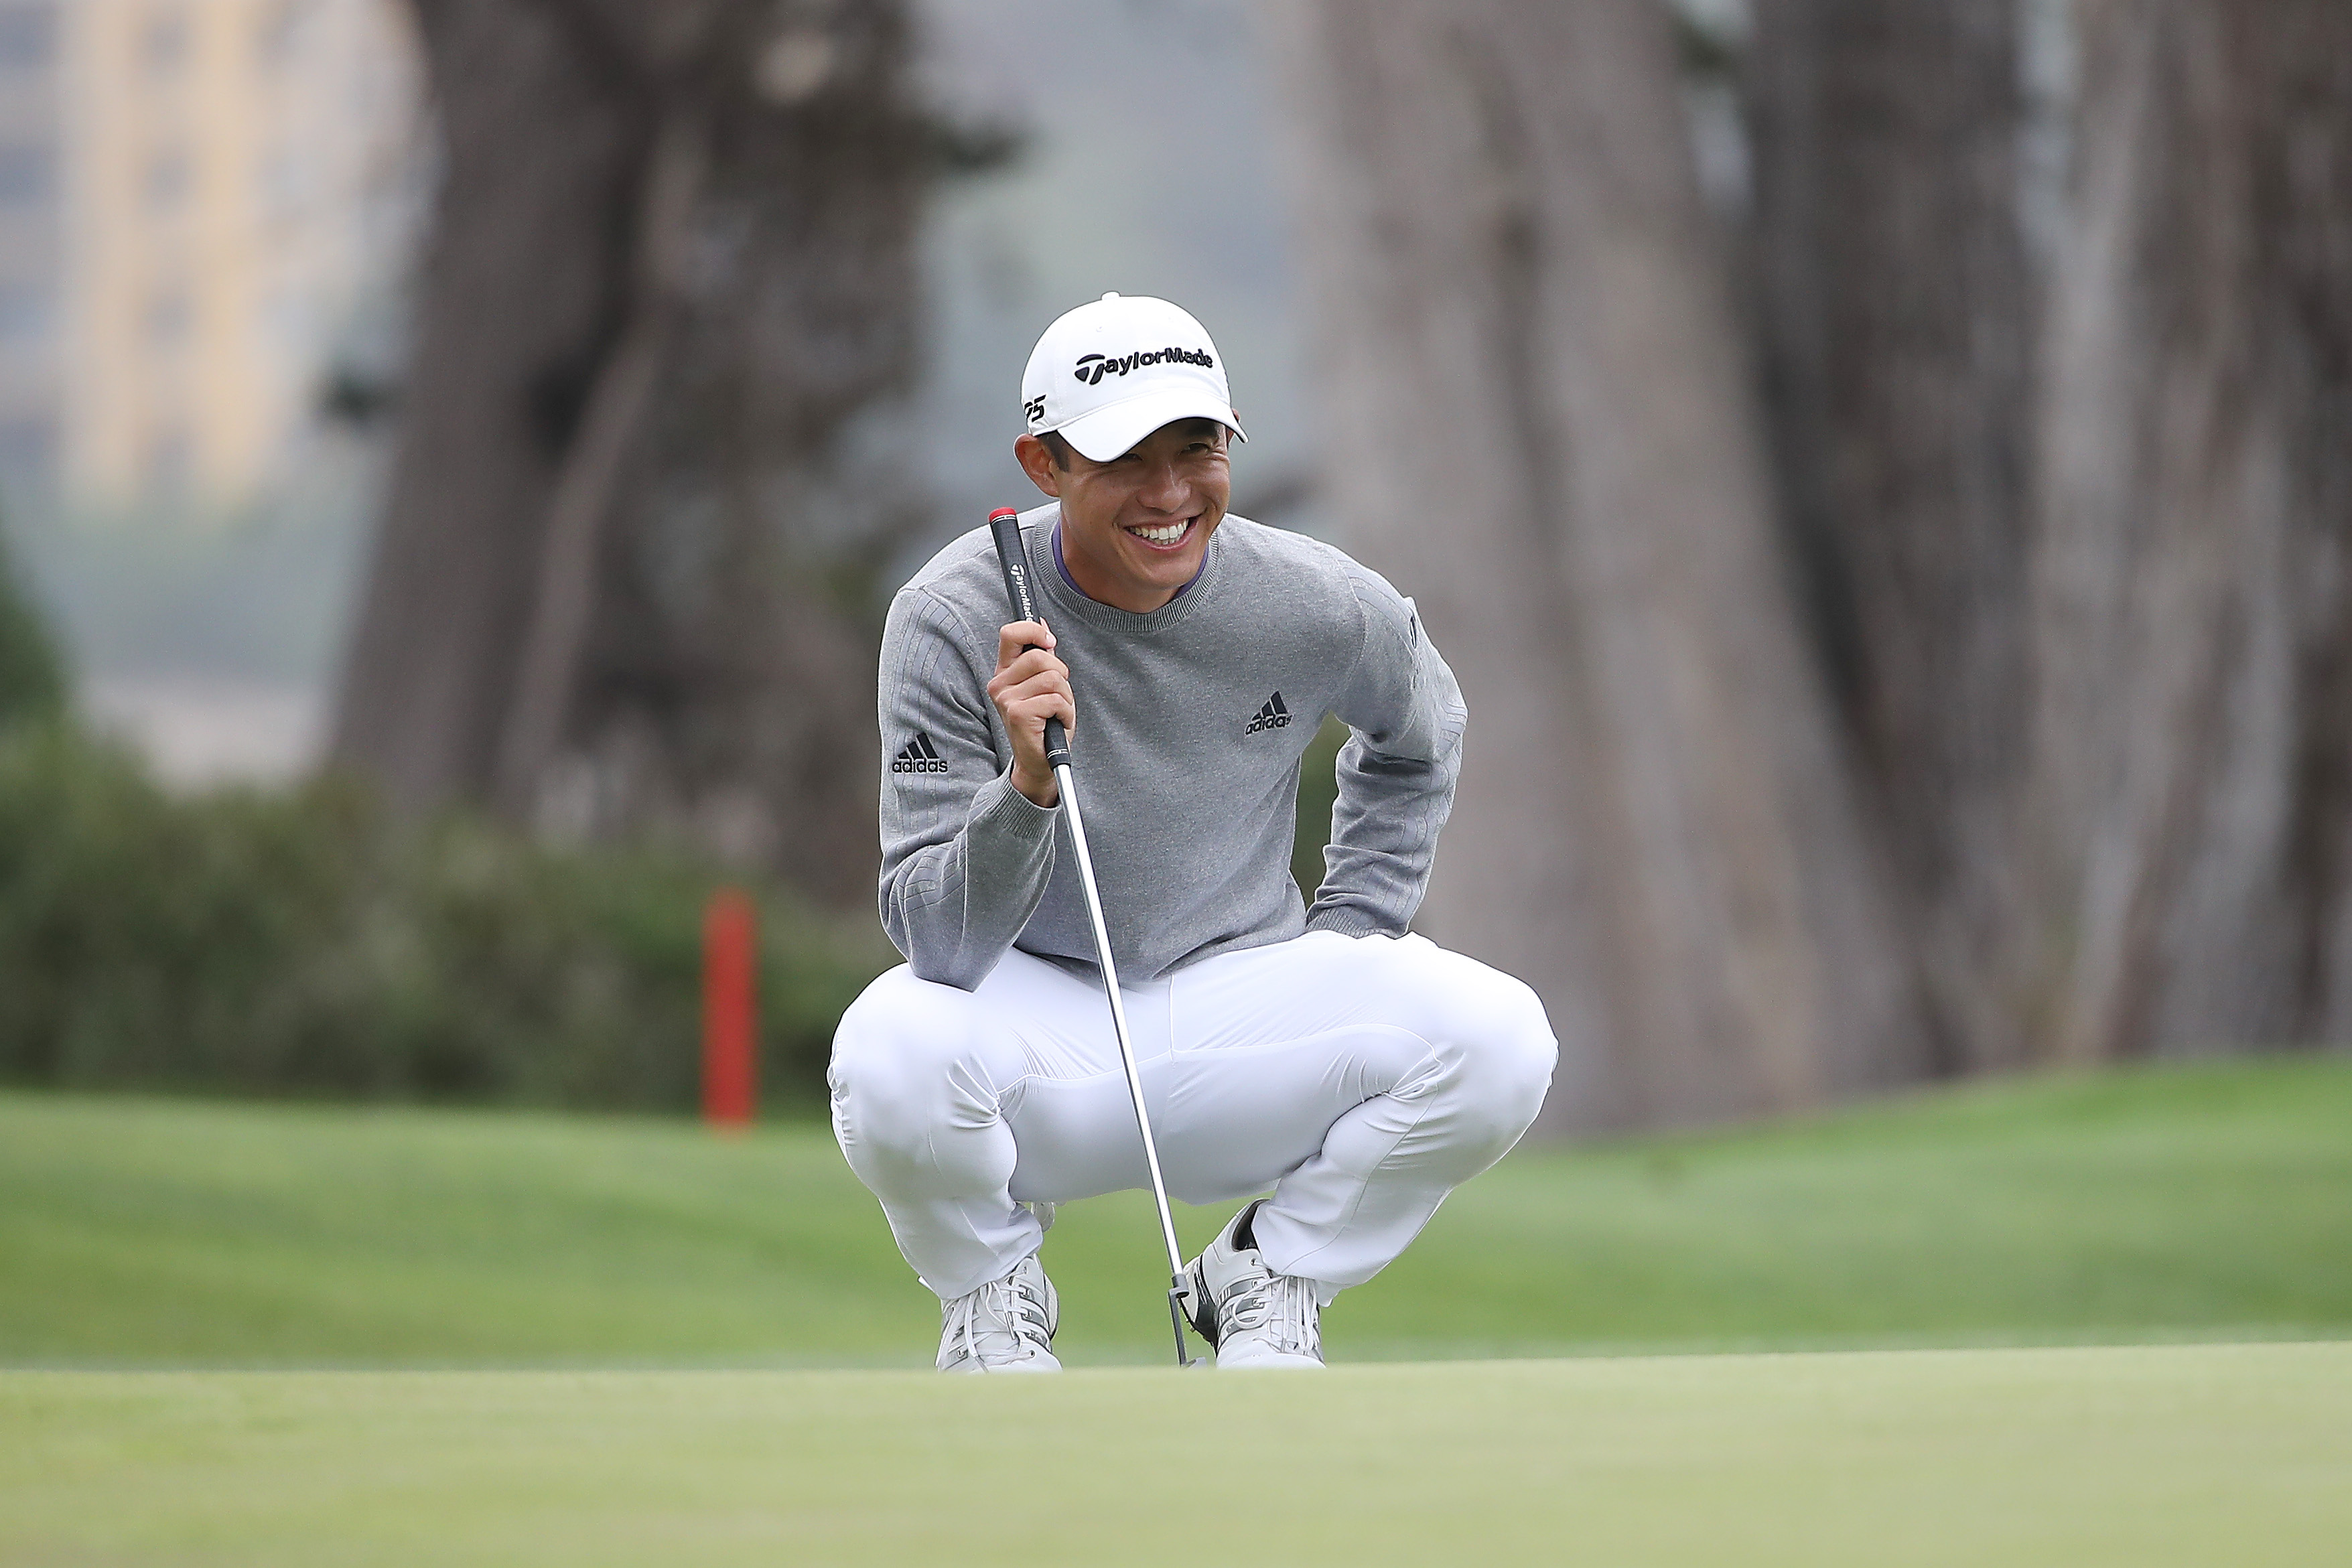 Collin Morikawa, 23, golf’s newest young star by winning PGA